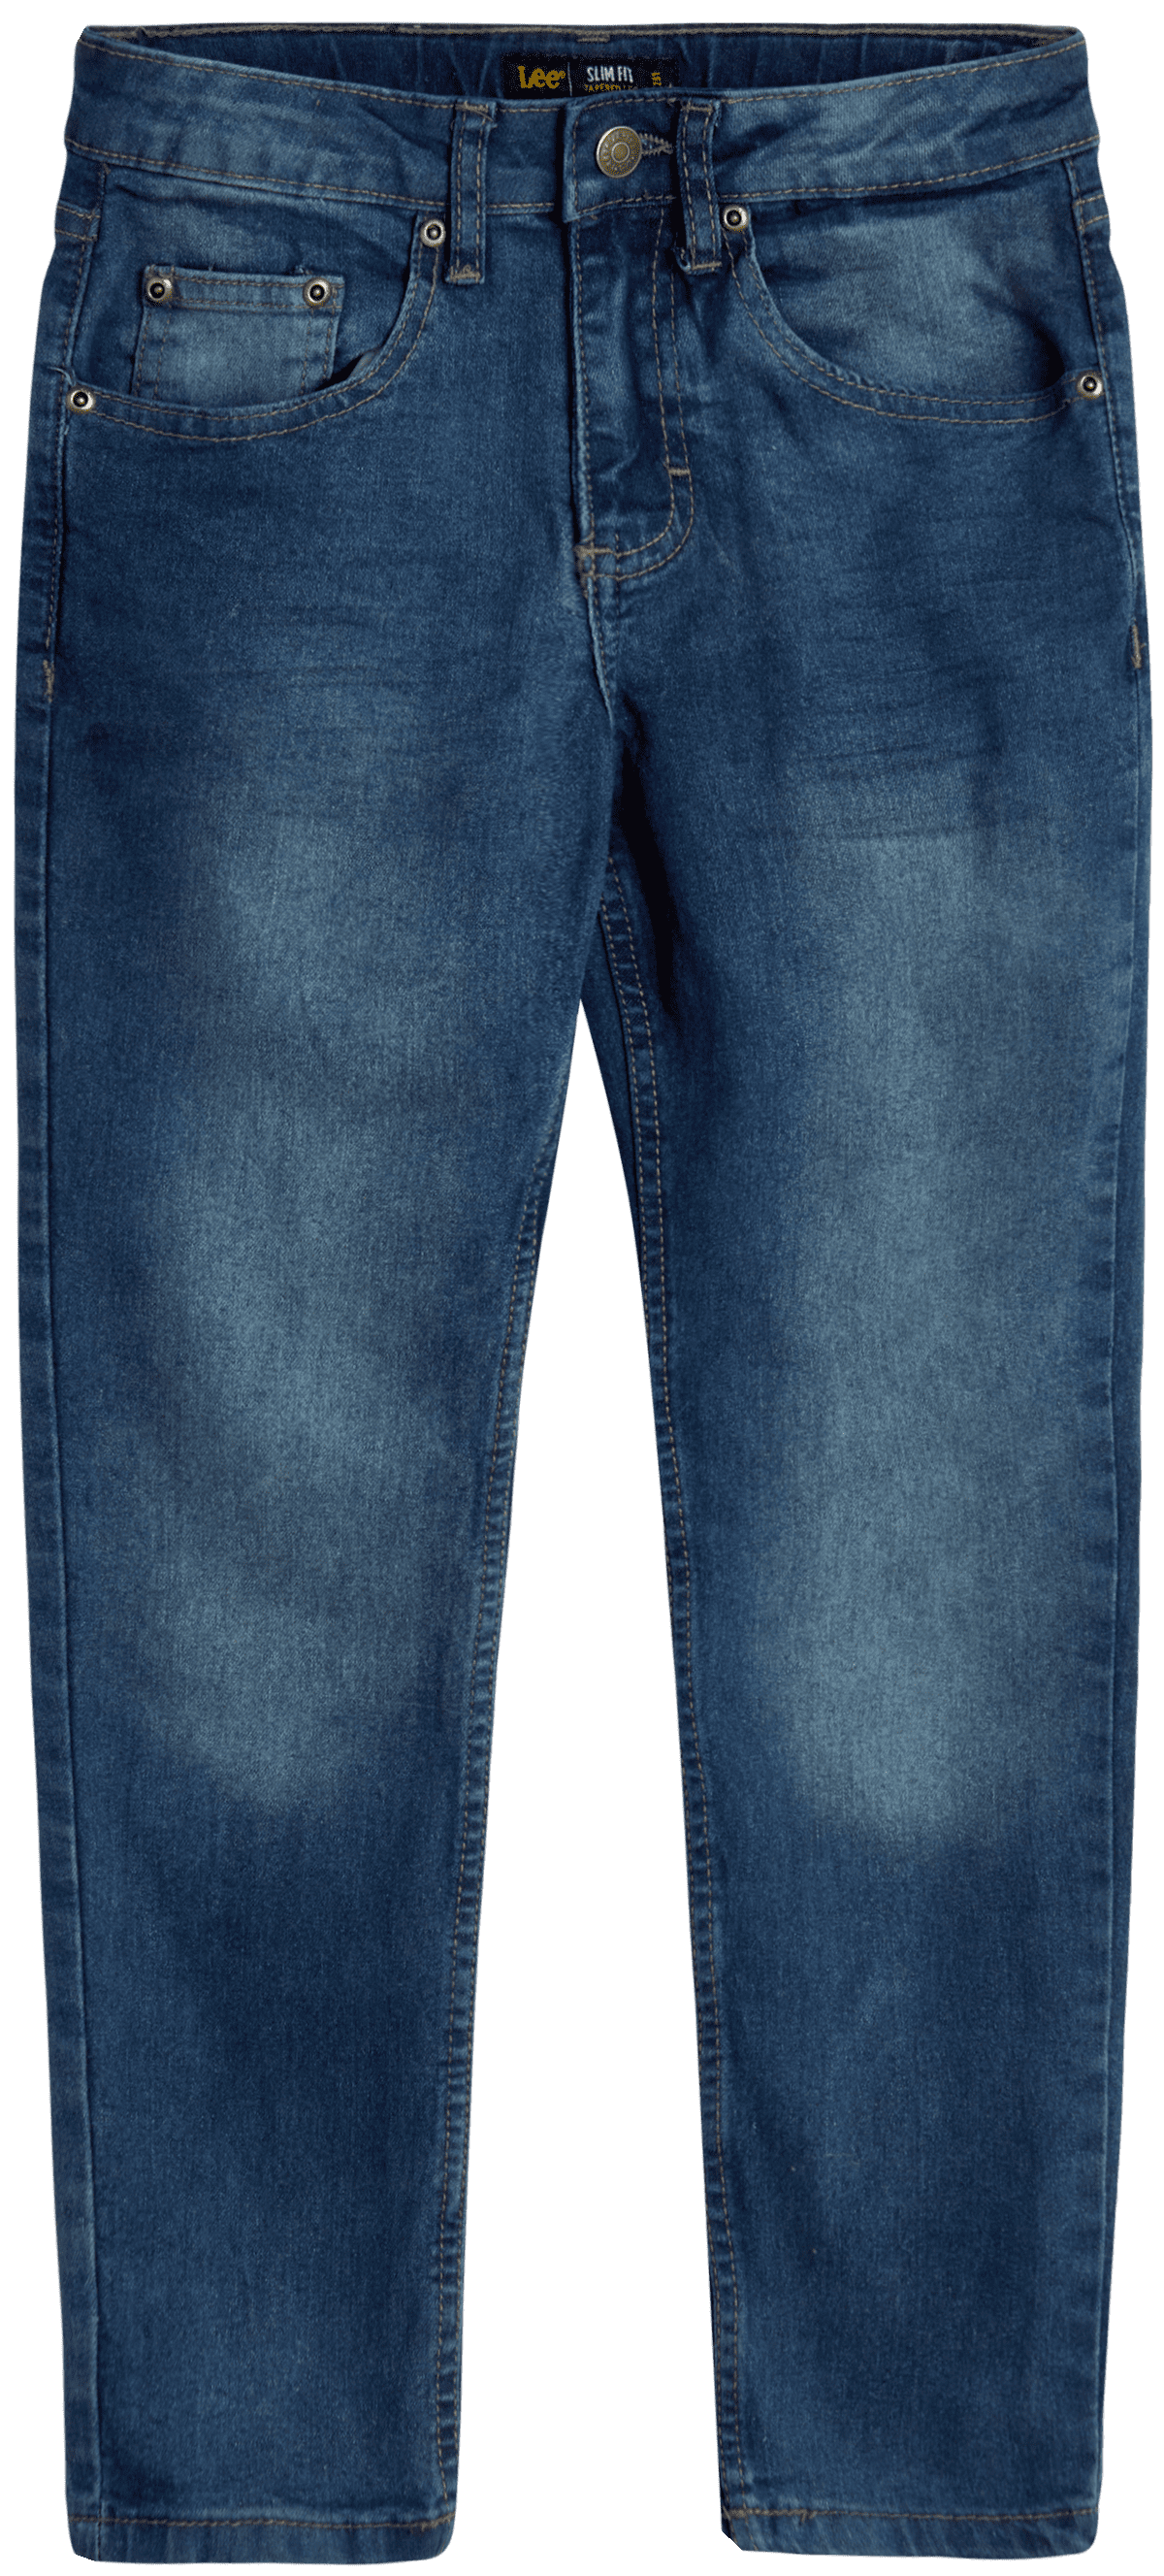 Lee Boys' Jeans - Slim Fit Comfort Stretch Denim Jeans (2T-16 ...